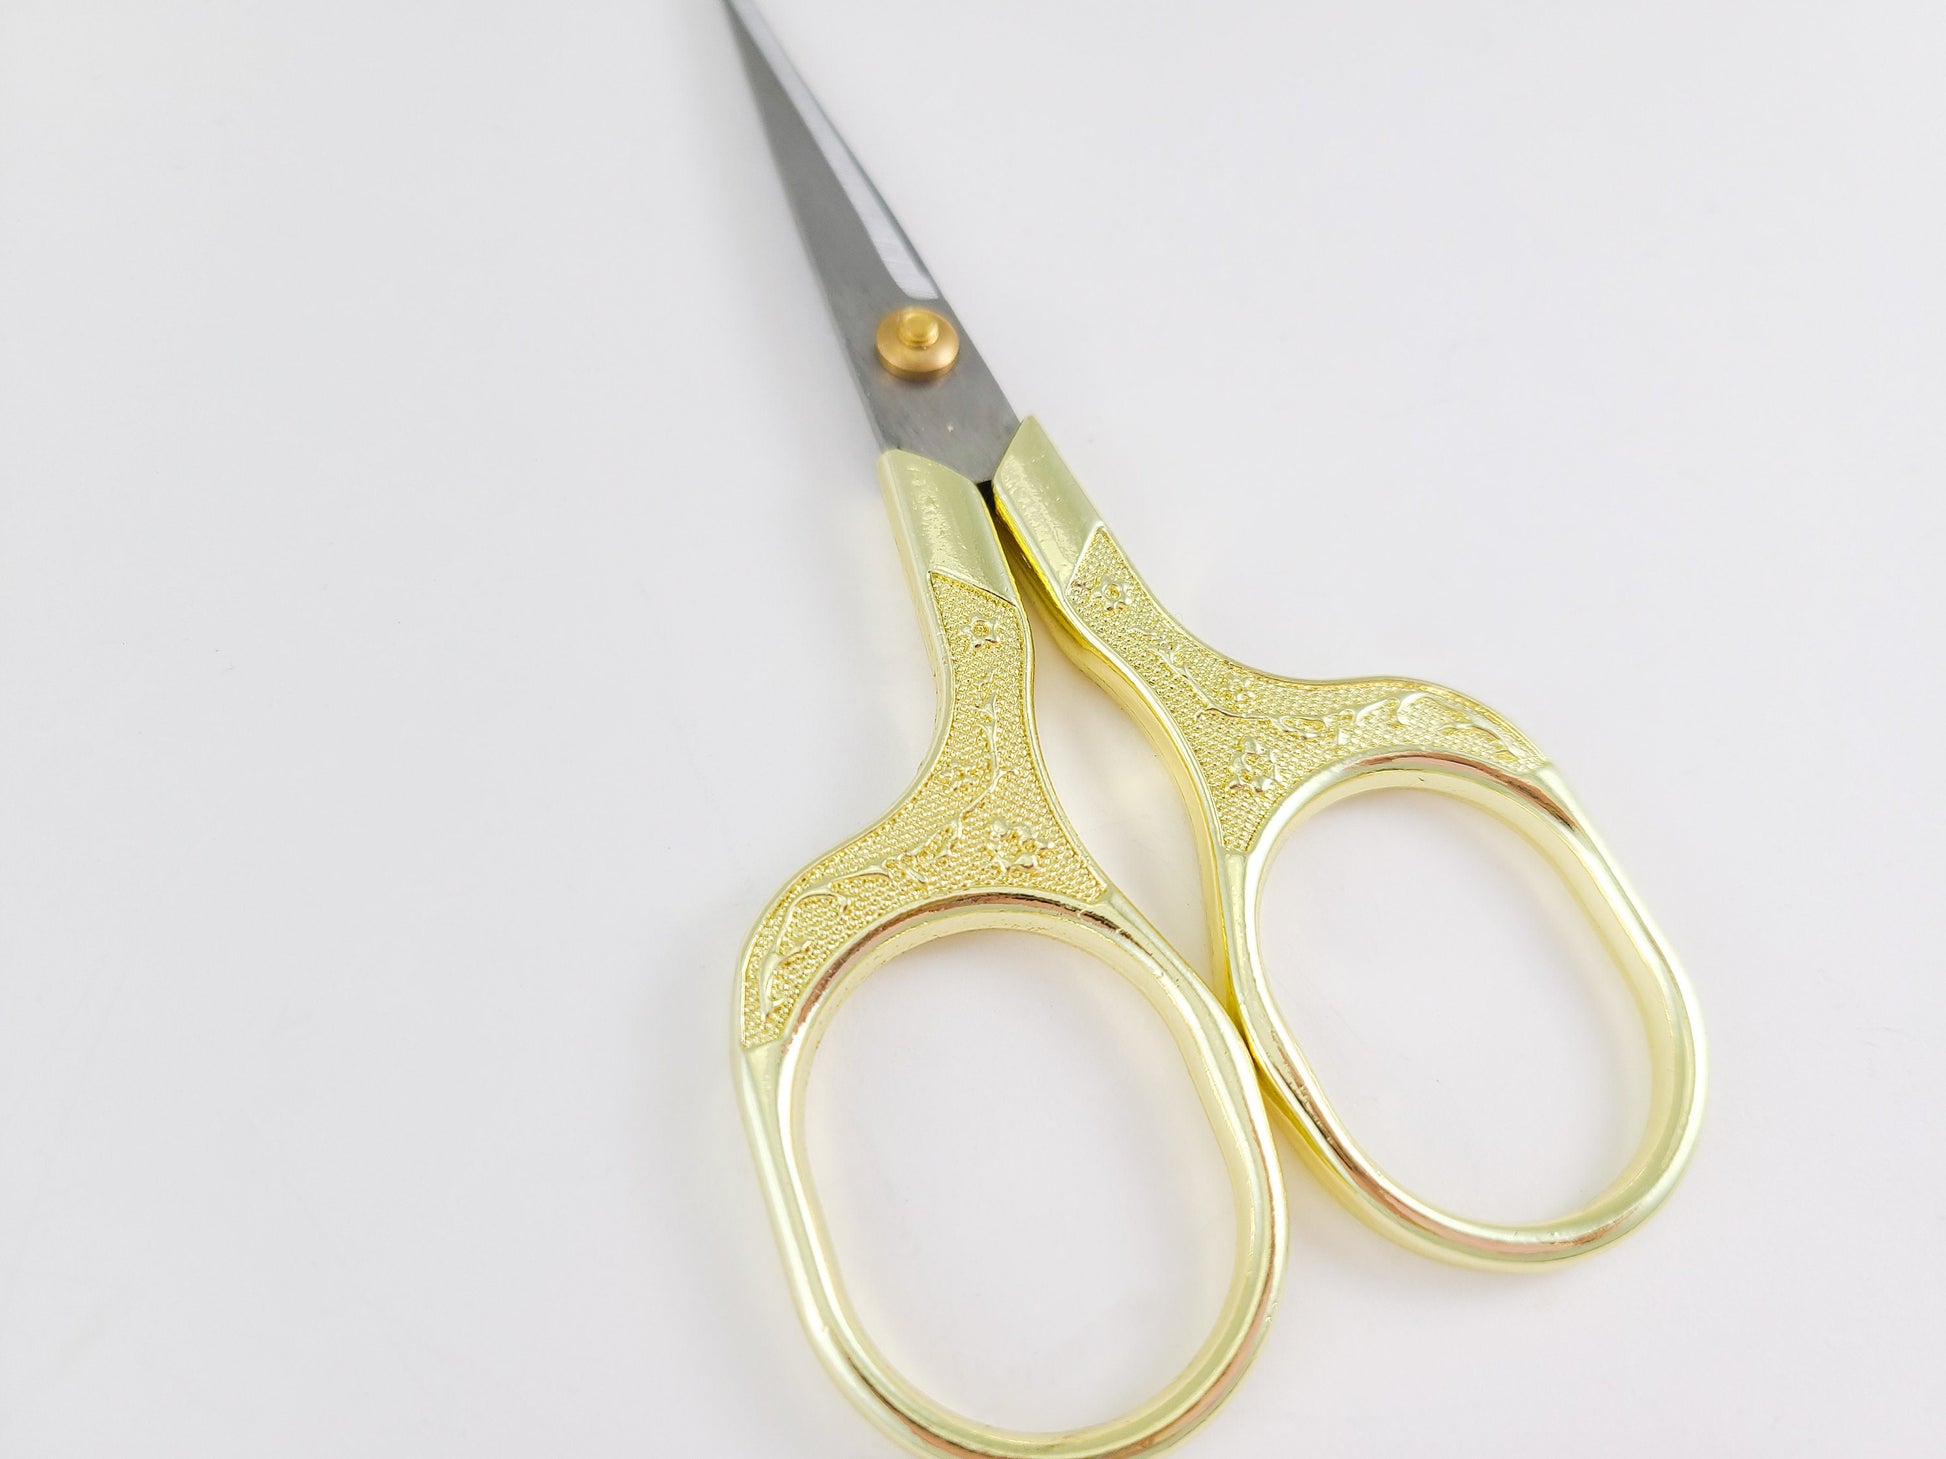 Small Scissors for Embroidery - TSA Compliant